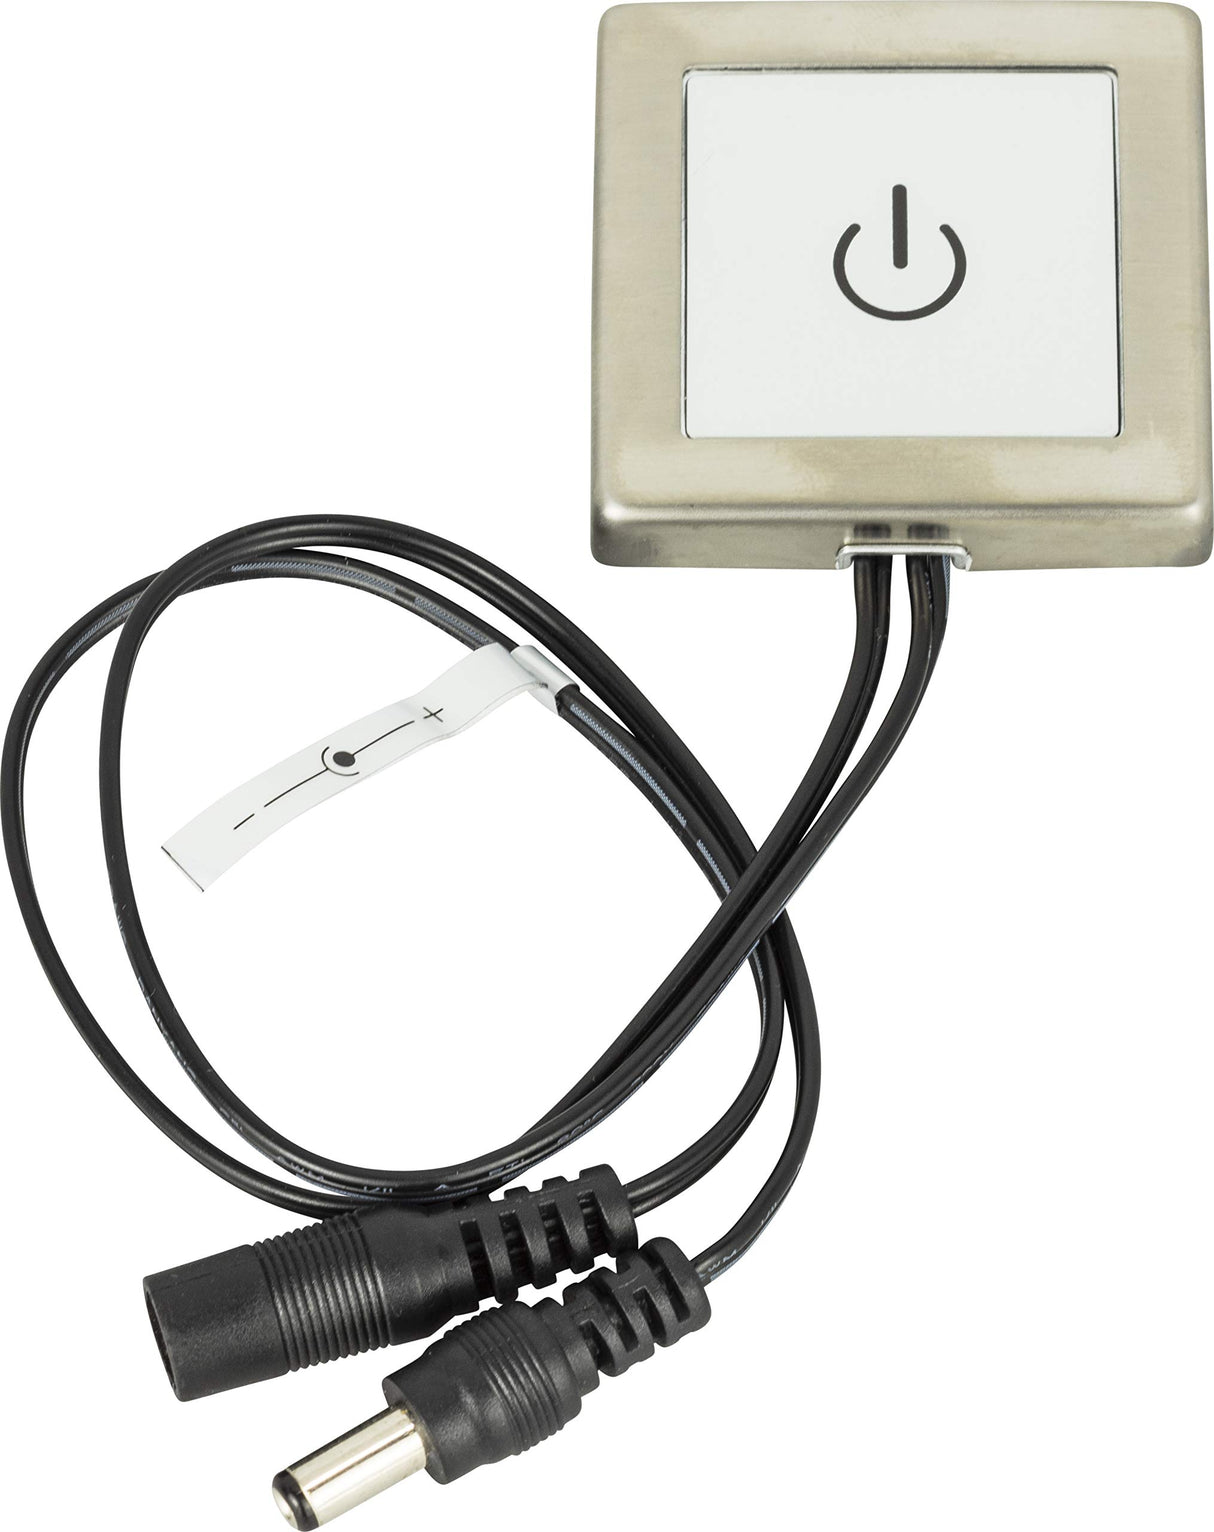 Task Lighting T-TDS-60W Touch Dimmer Switch for LED Lighting